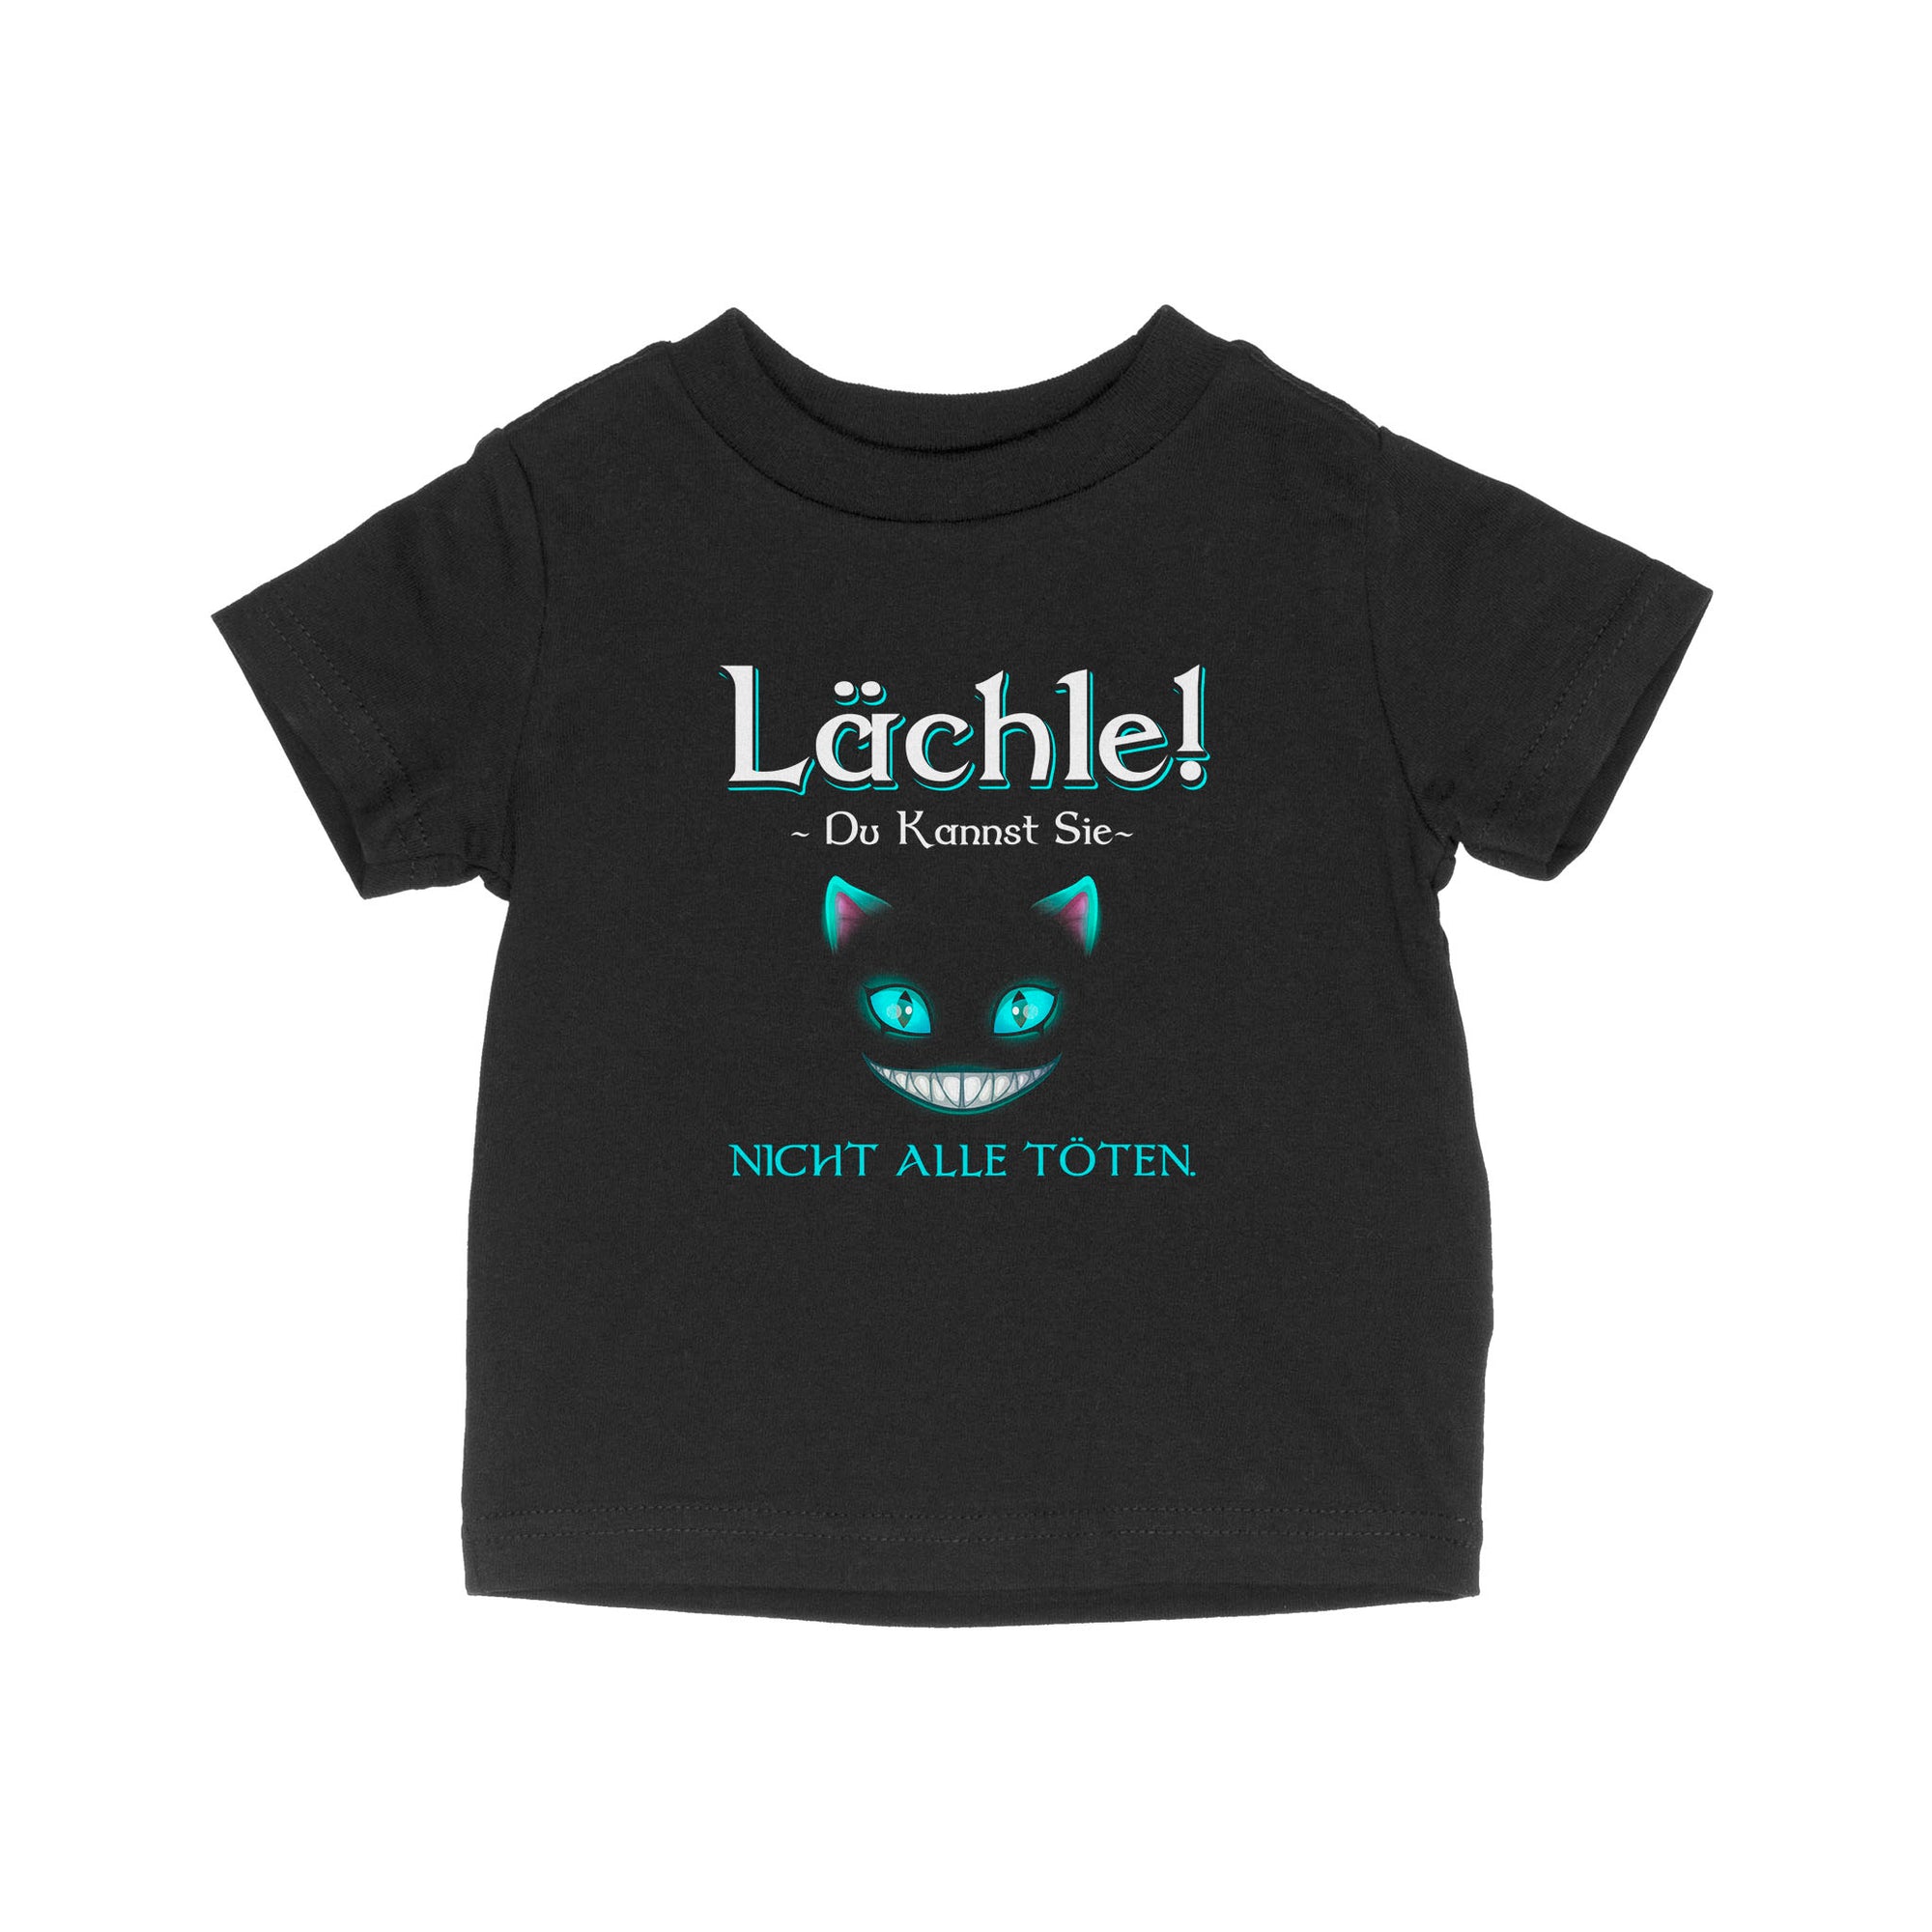 Lachile Du Kannst Sle Night Alle Toten - Baby T-Shirt